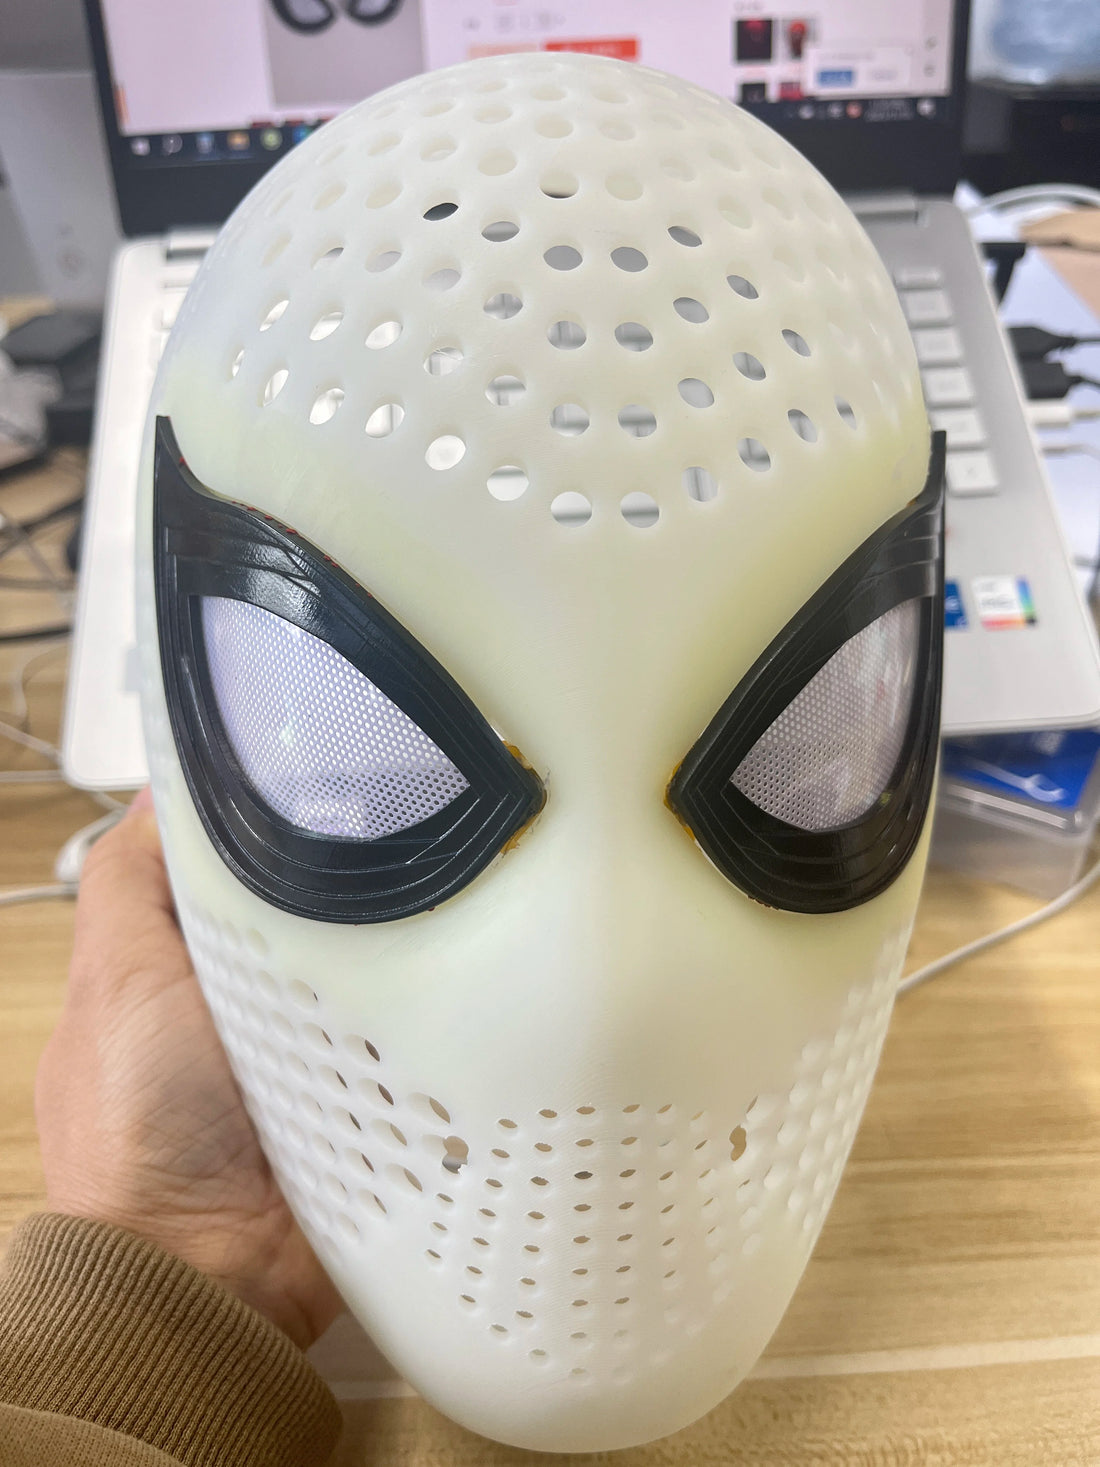 Marvel Spider-Man Faceshell / Eyes for DIY Handmade Holland Spiderman Mask with Halloween Cosplay Costume Masks Birthday Gift